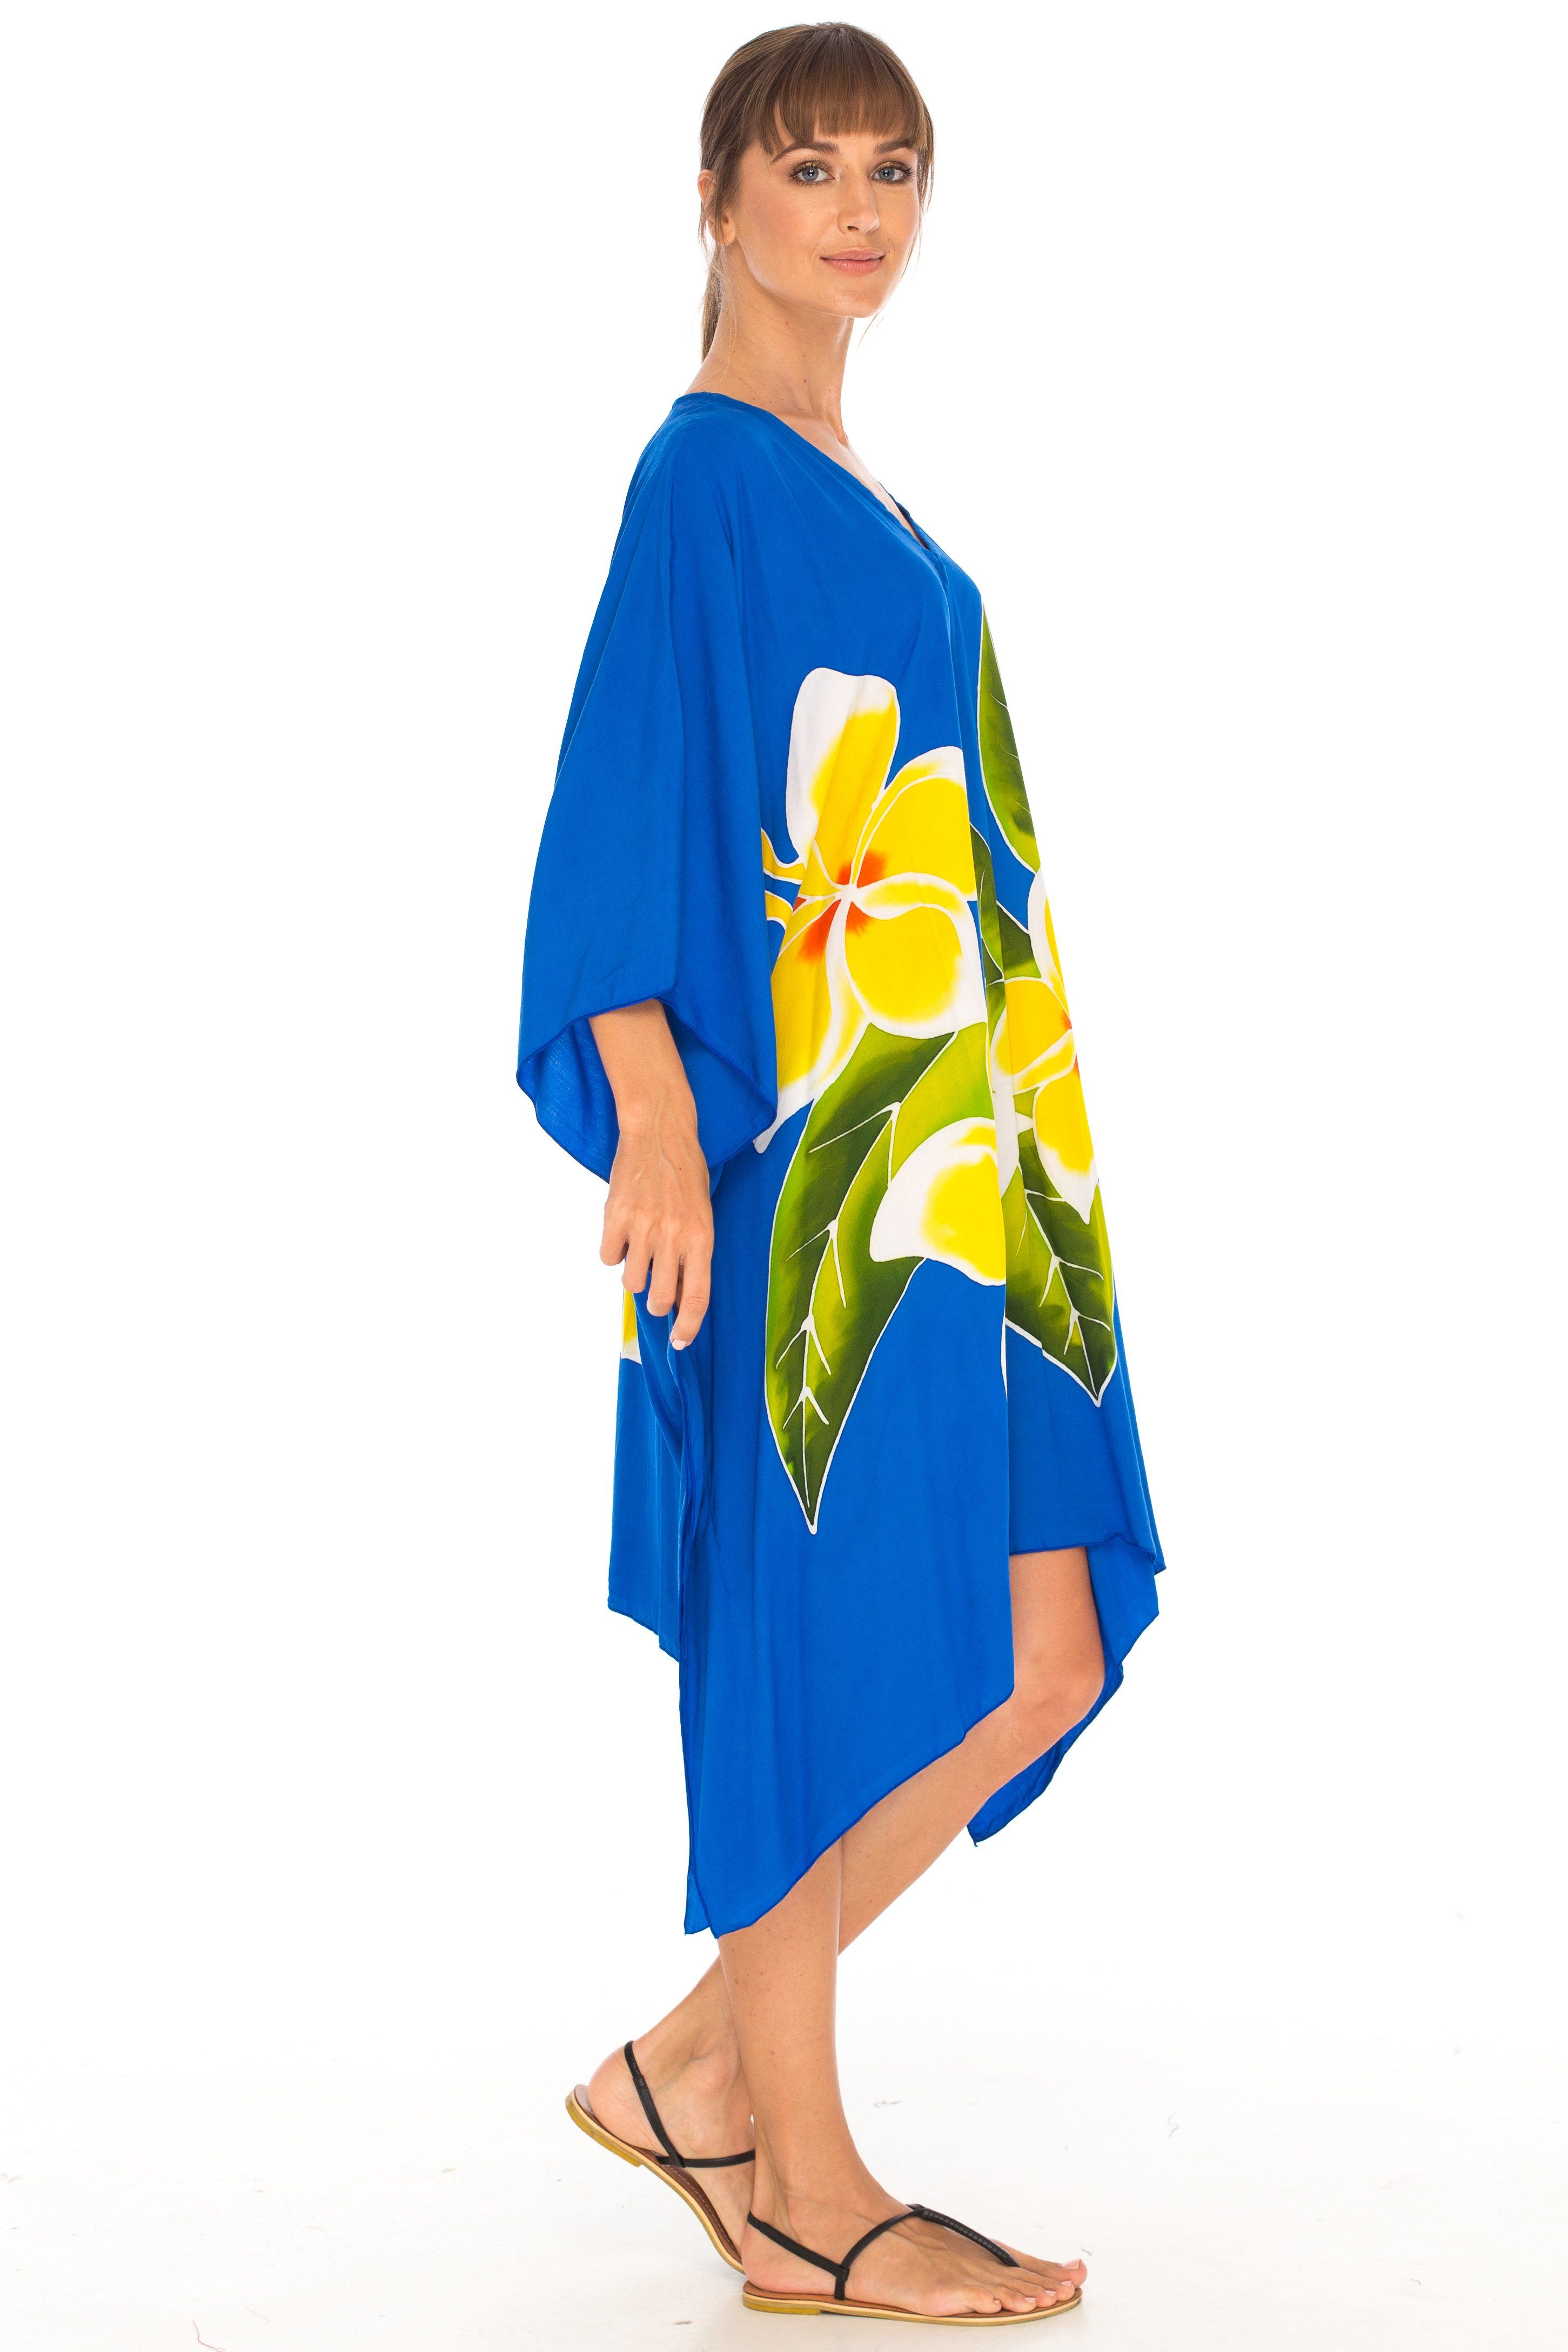 Hrang Floral short kaftan Dress: A Must-Have for Fashionable Caftan for  Women | eBay